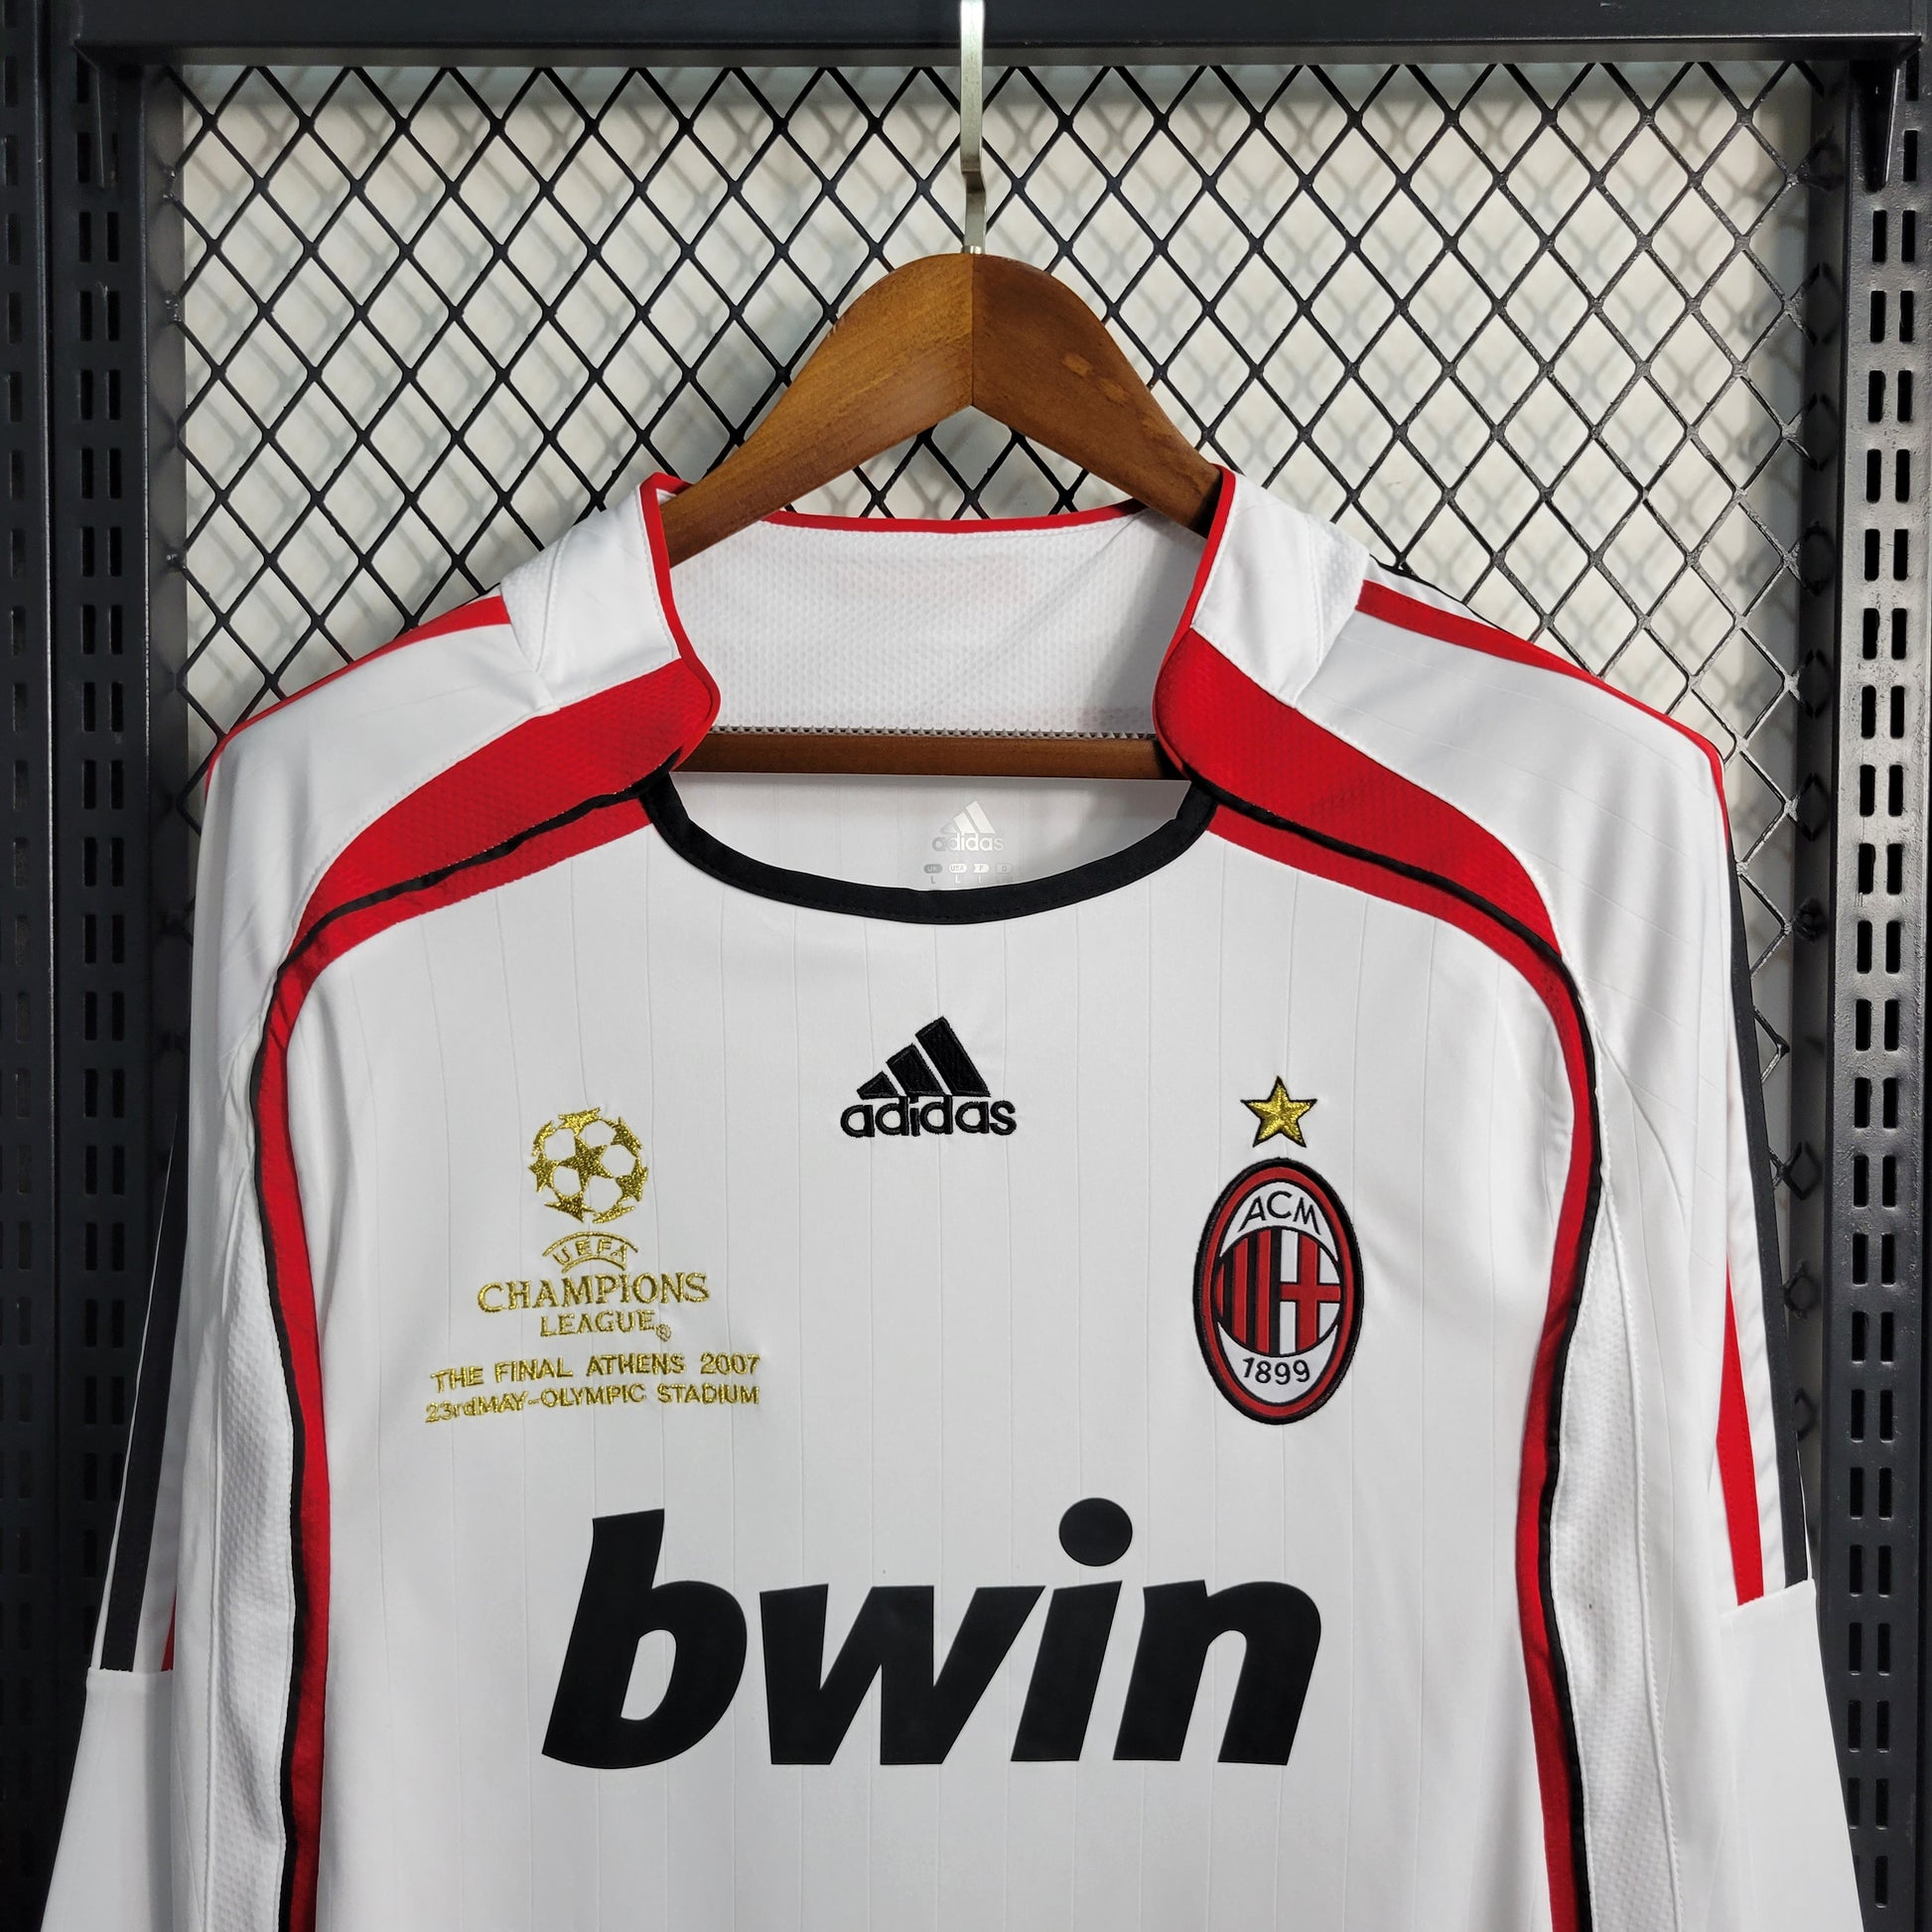 2006-07 AC MILAN Away S/S No.3 Maldini 2007 UEFA CL Final ACM jersey shirt M